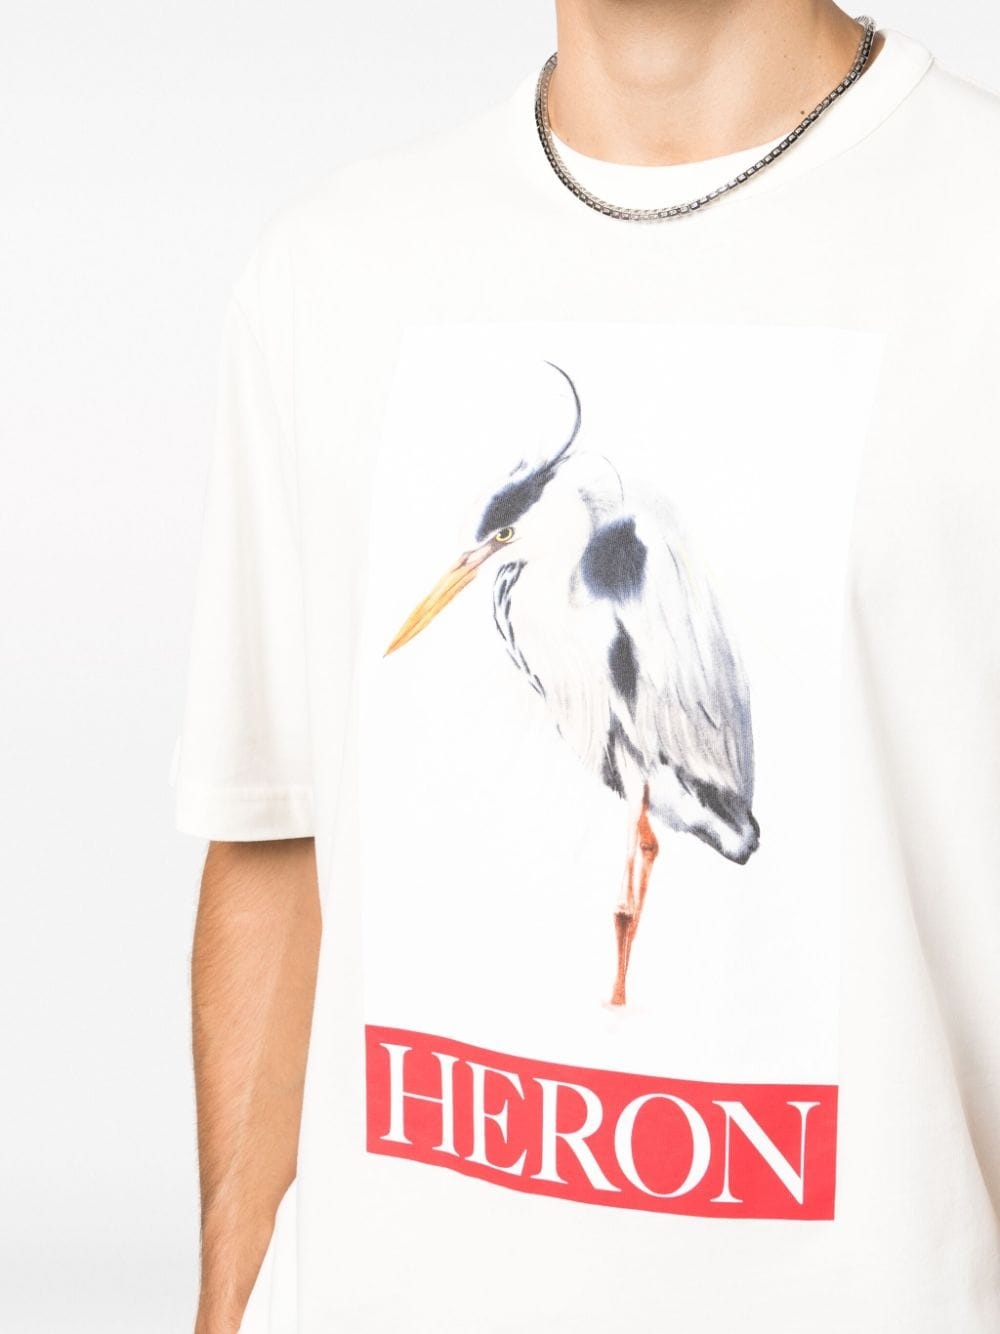 Heron Bird Painted cotton T-shirt - 5